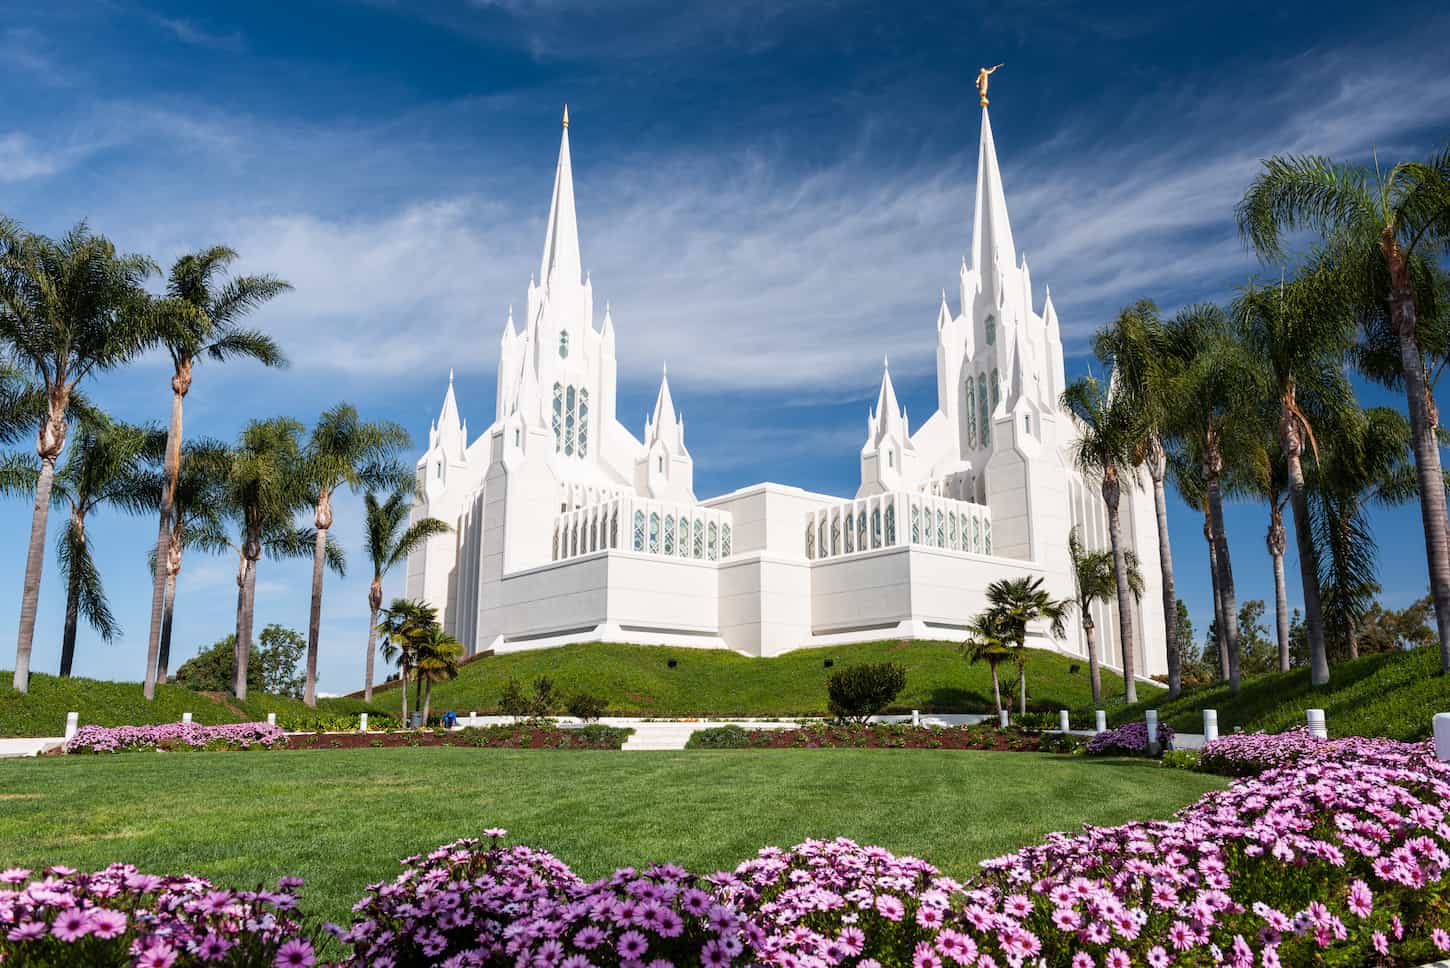 An image of The San Diego California Mormon Temple in La Jolla, California.